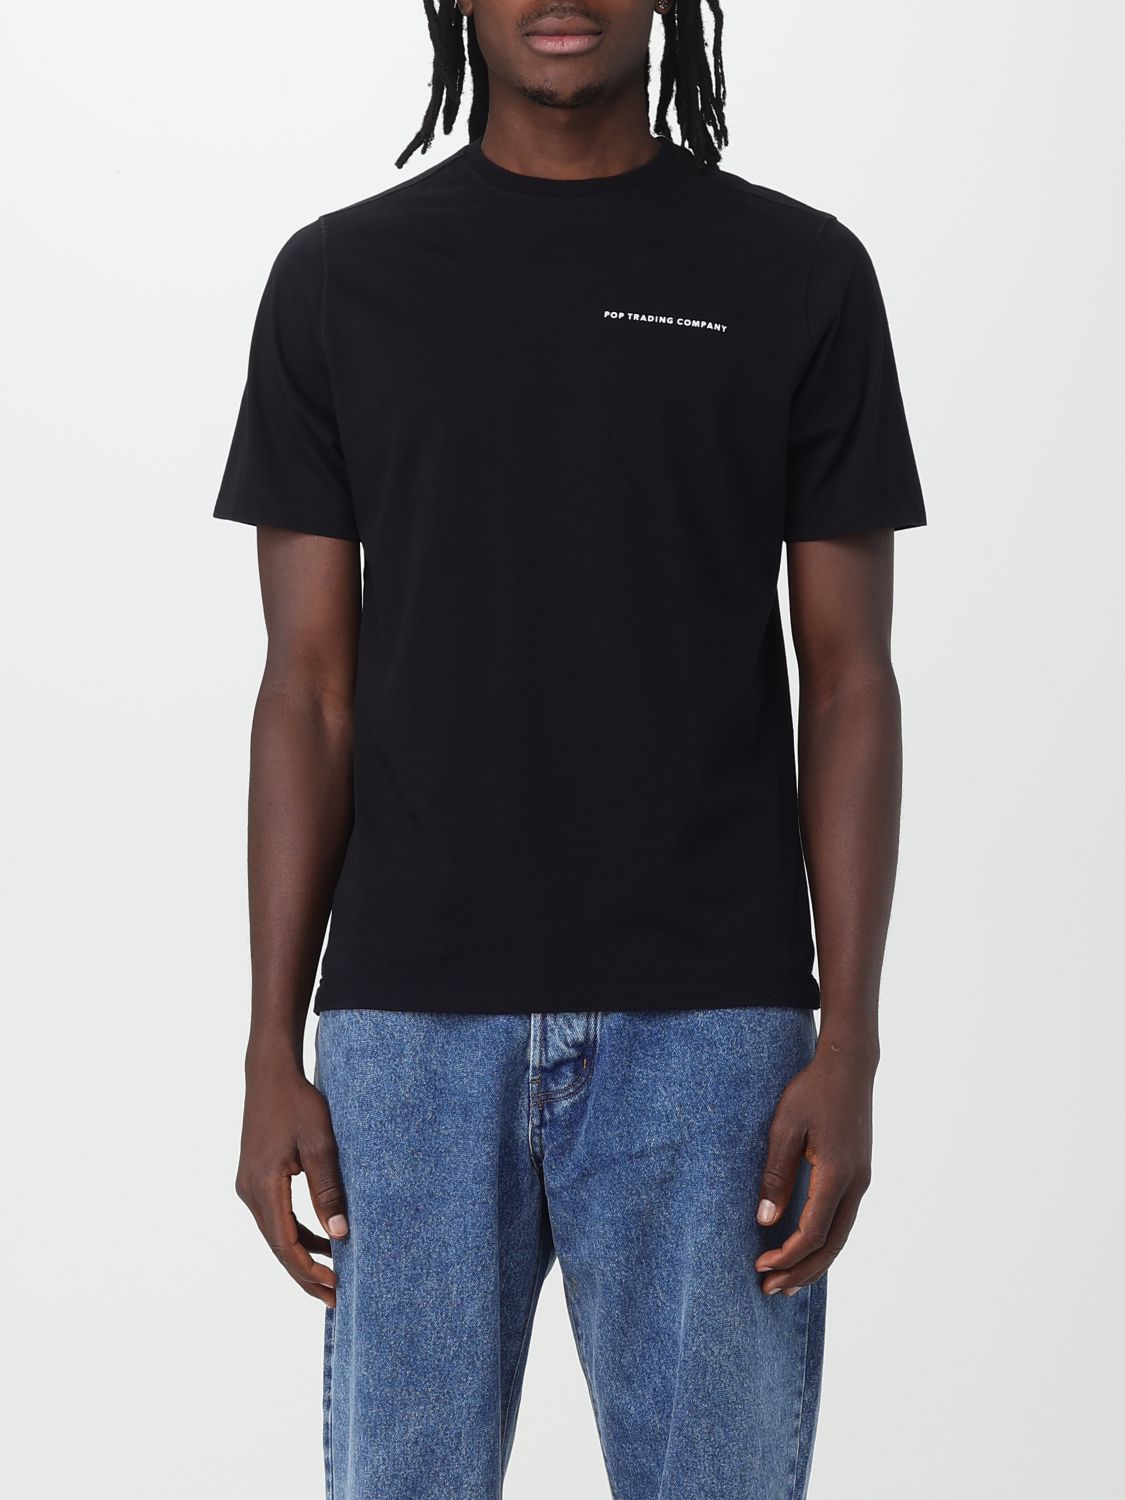 t-shirt pop trading company men colour black